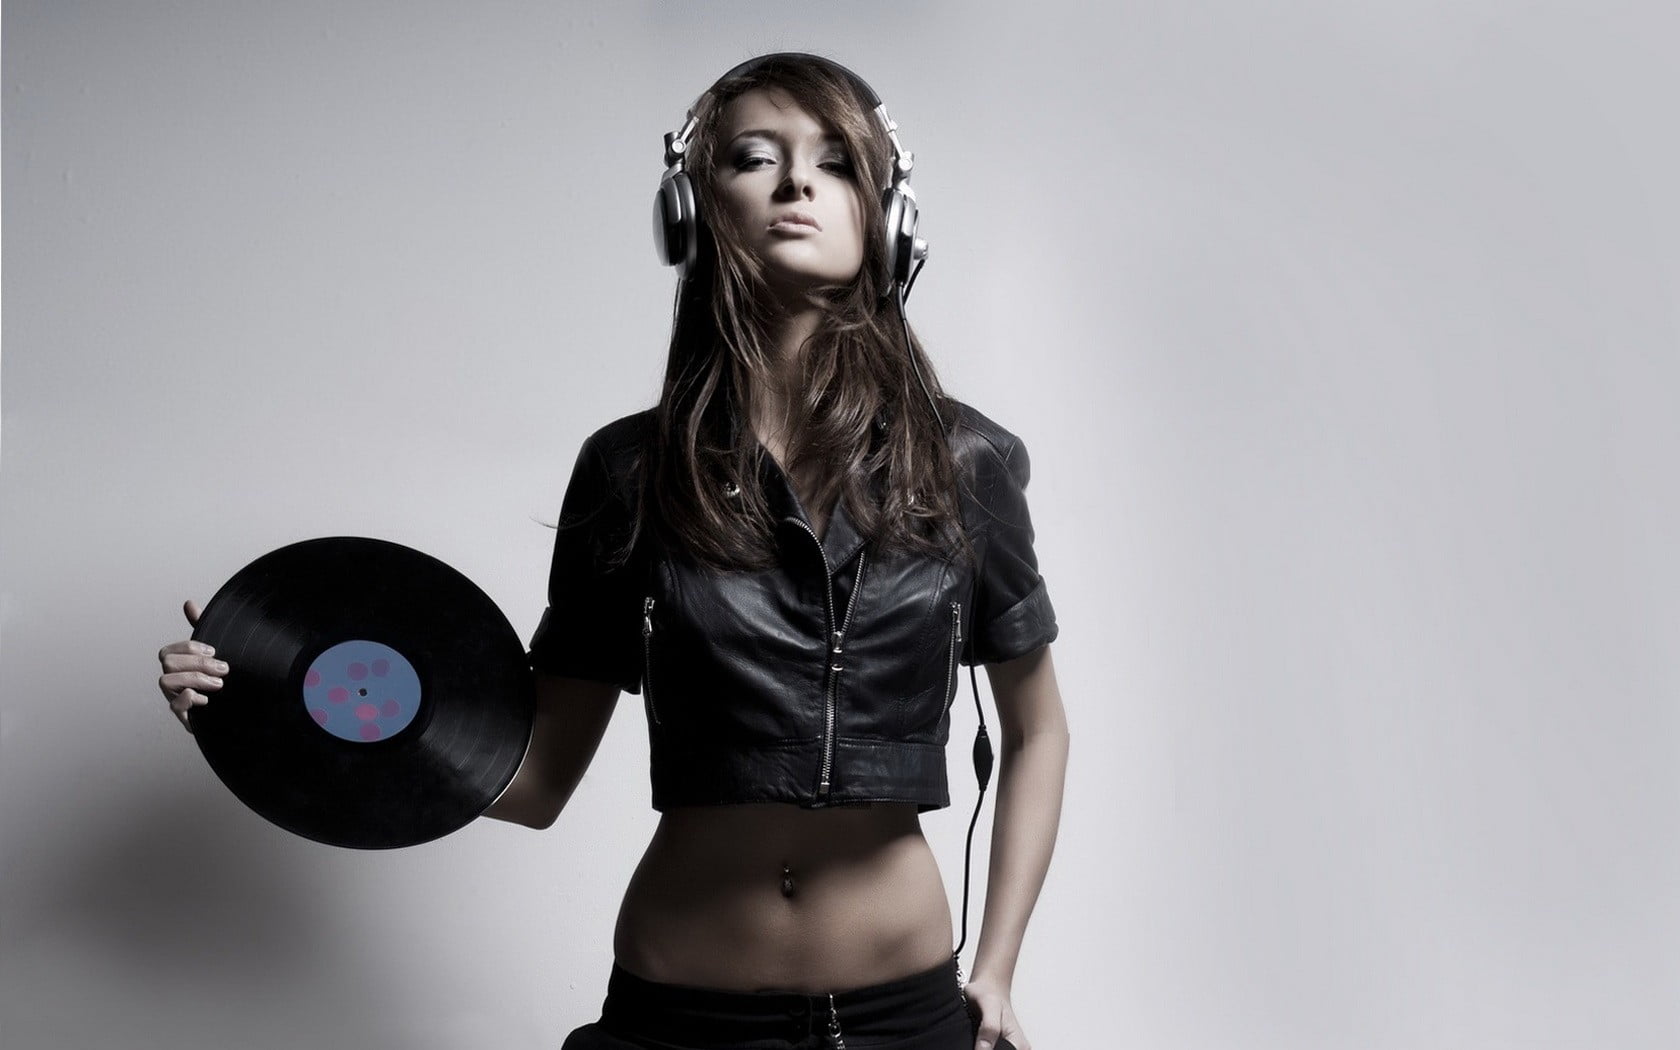 women, headphones, vinyl, headsets, model, DJ, plates, music